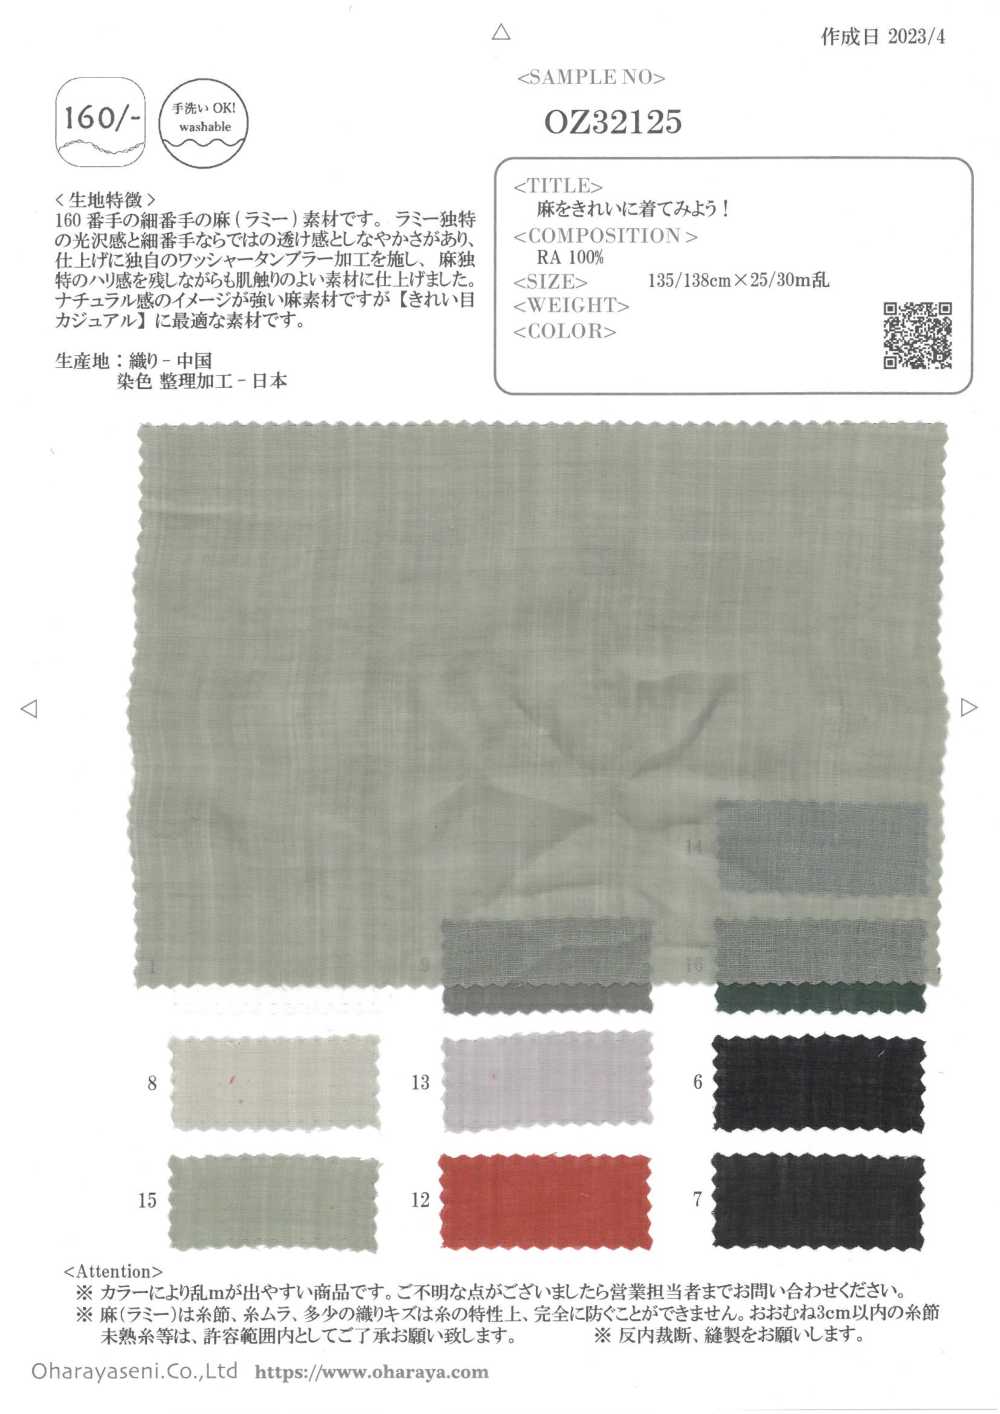 OZ32125 ¡Usemos Lino Maravillosamente![Fabrica Textil] Oharayaseni